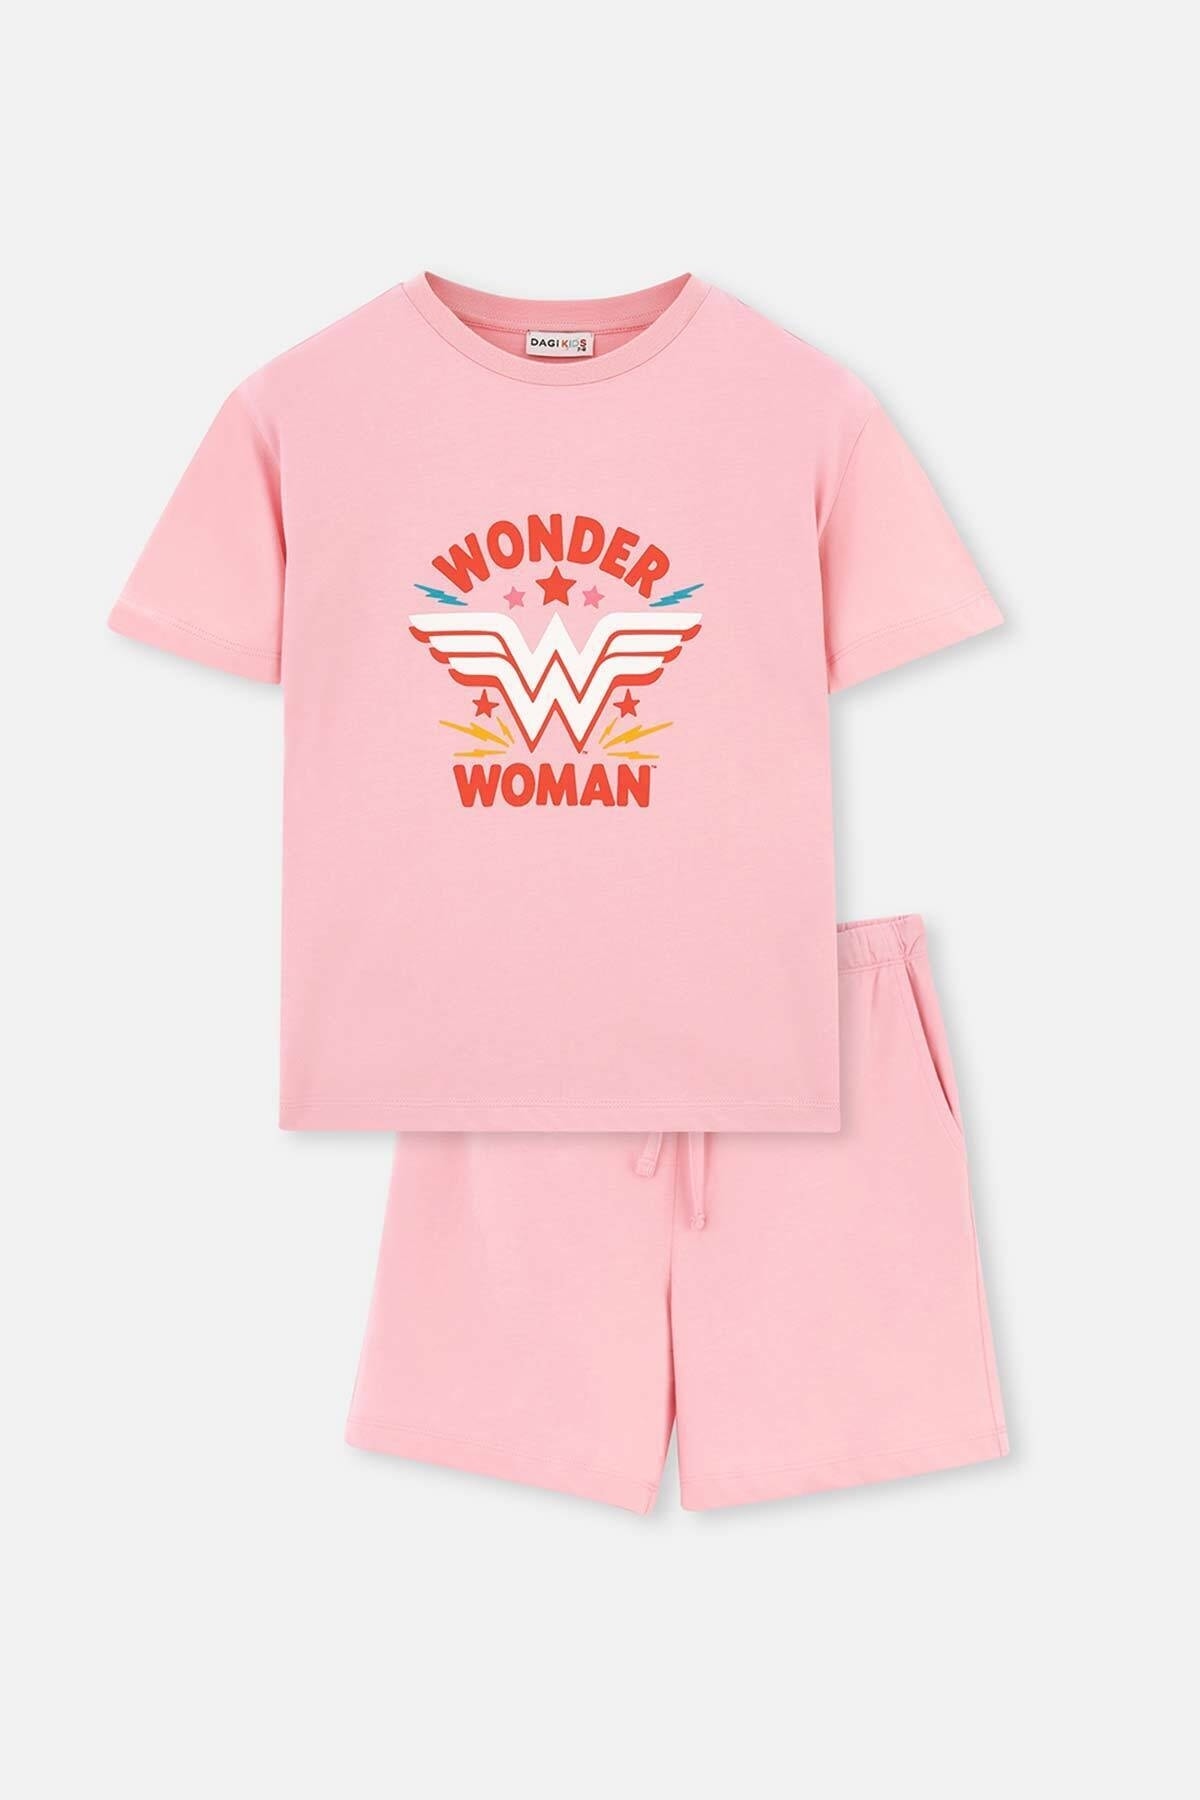 Dagi Pink Wonder Woman Printed Short Sleeve Shorts Pajamas Set